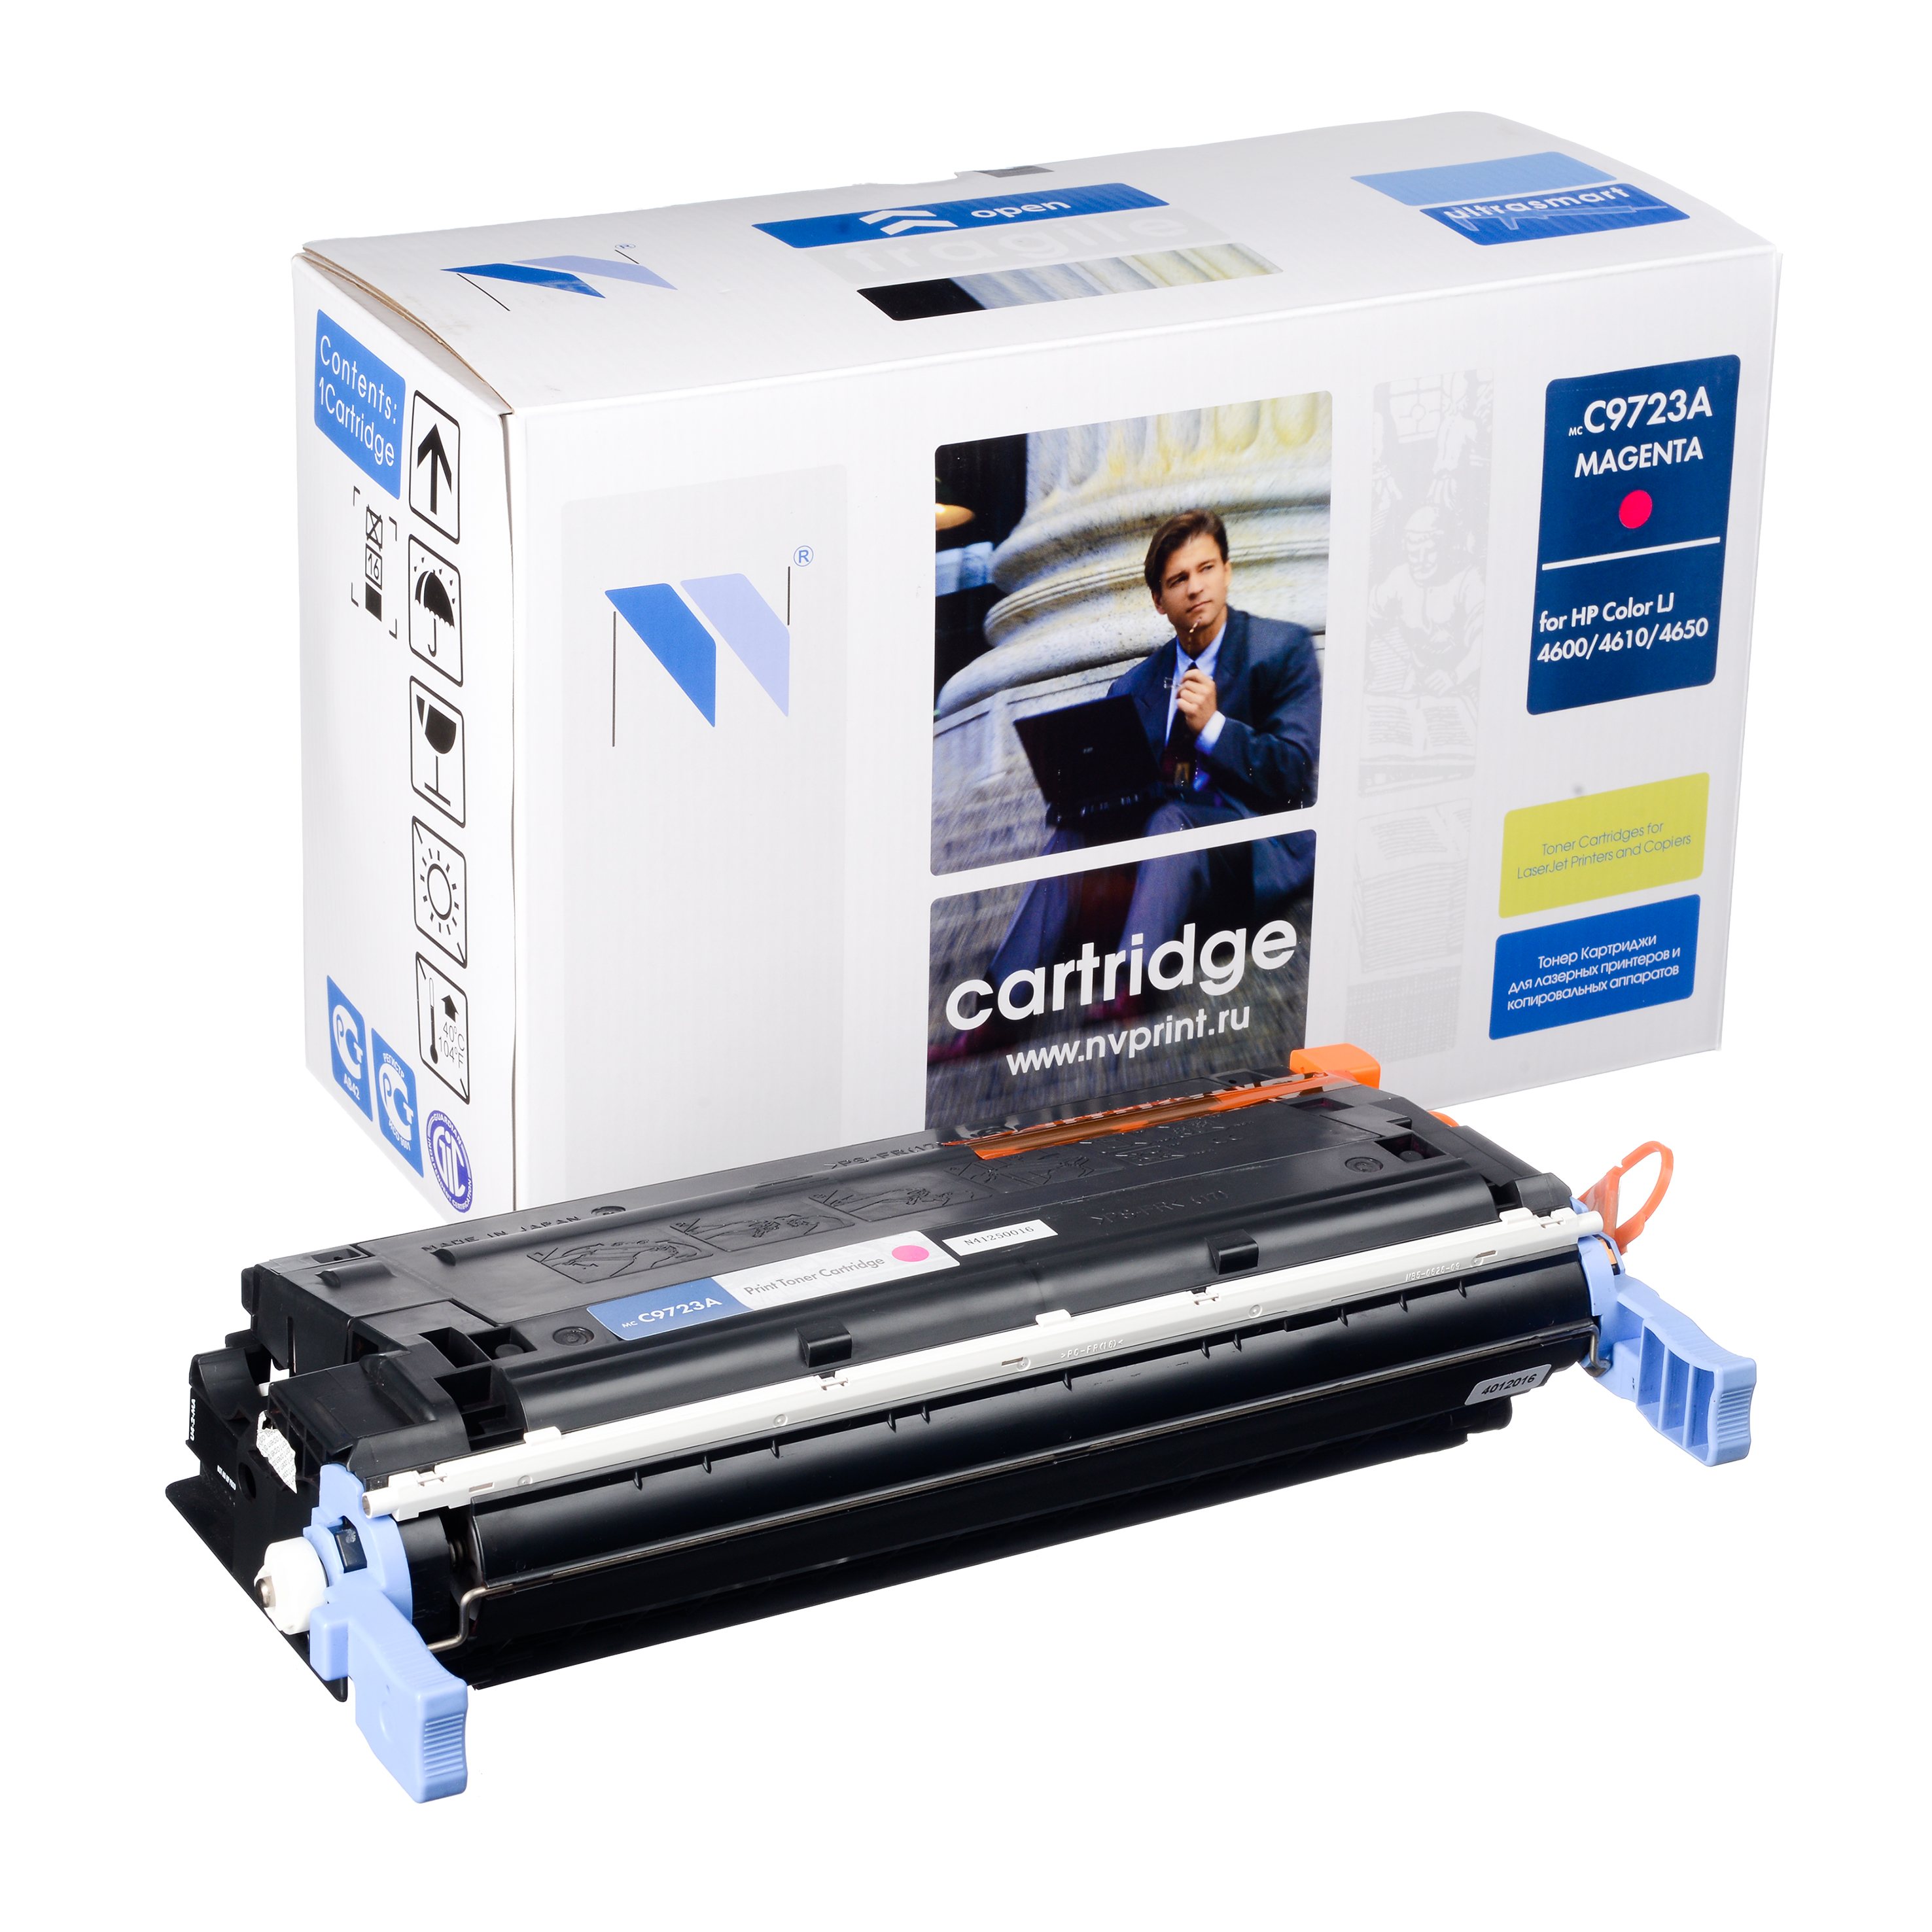 Картридж NV Print C9723A magentaКартридж NV Print для HP Color LJ 4600/4650Картридж NV Print для HP Color LJ 4600/4650